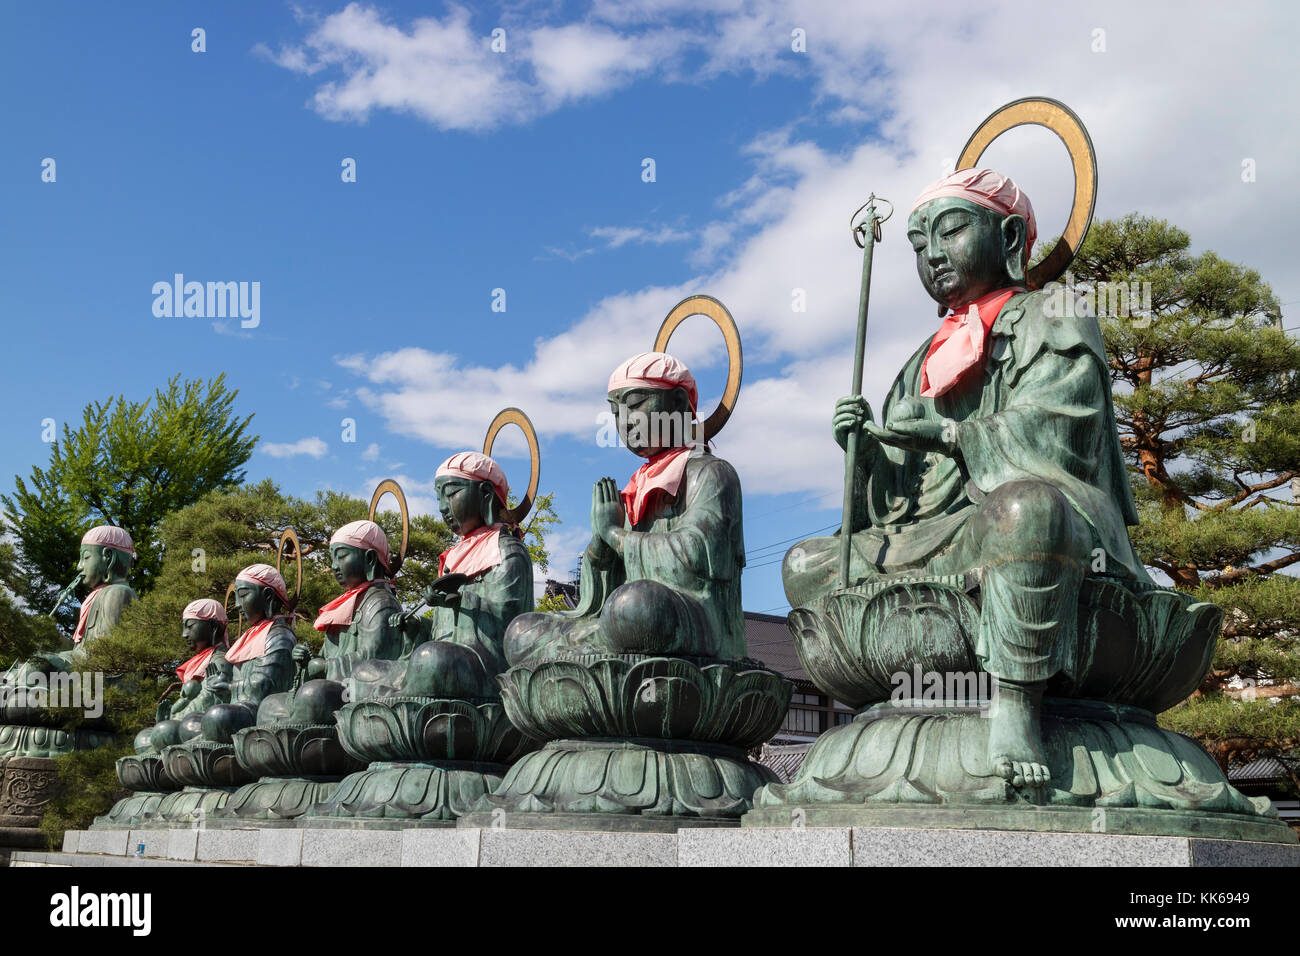 Nagano - Japan, June 3, 2017: Six bronze Buddha statues with red bibs and bonnets called rokujizo, or 6 jizo, at Zenkoji Temple, Nagano Stock Photo